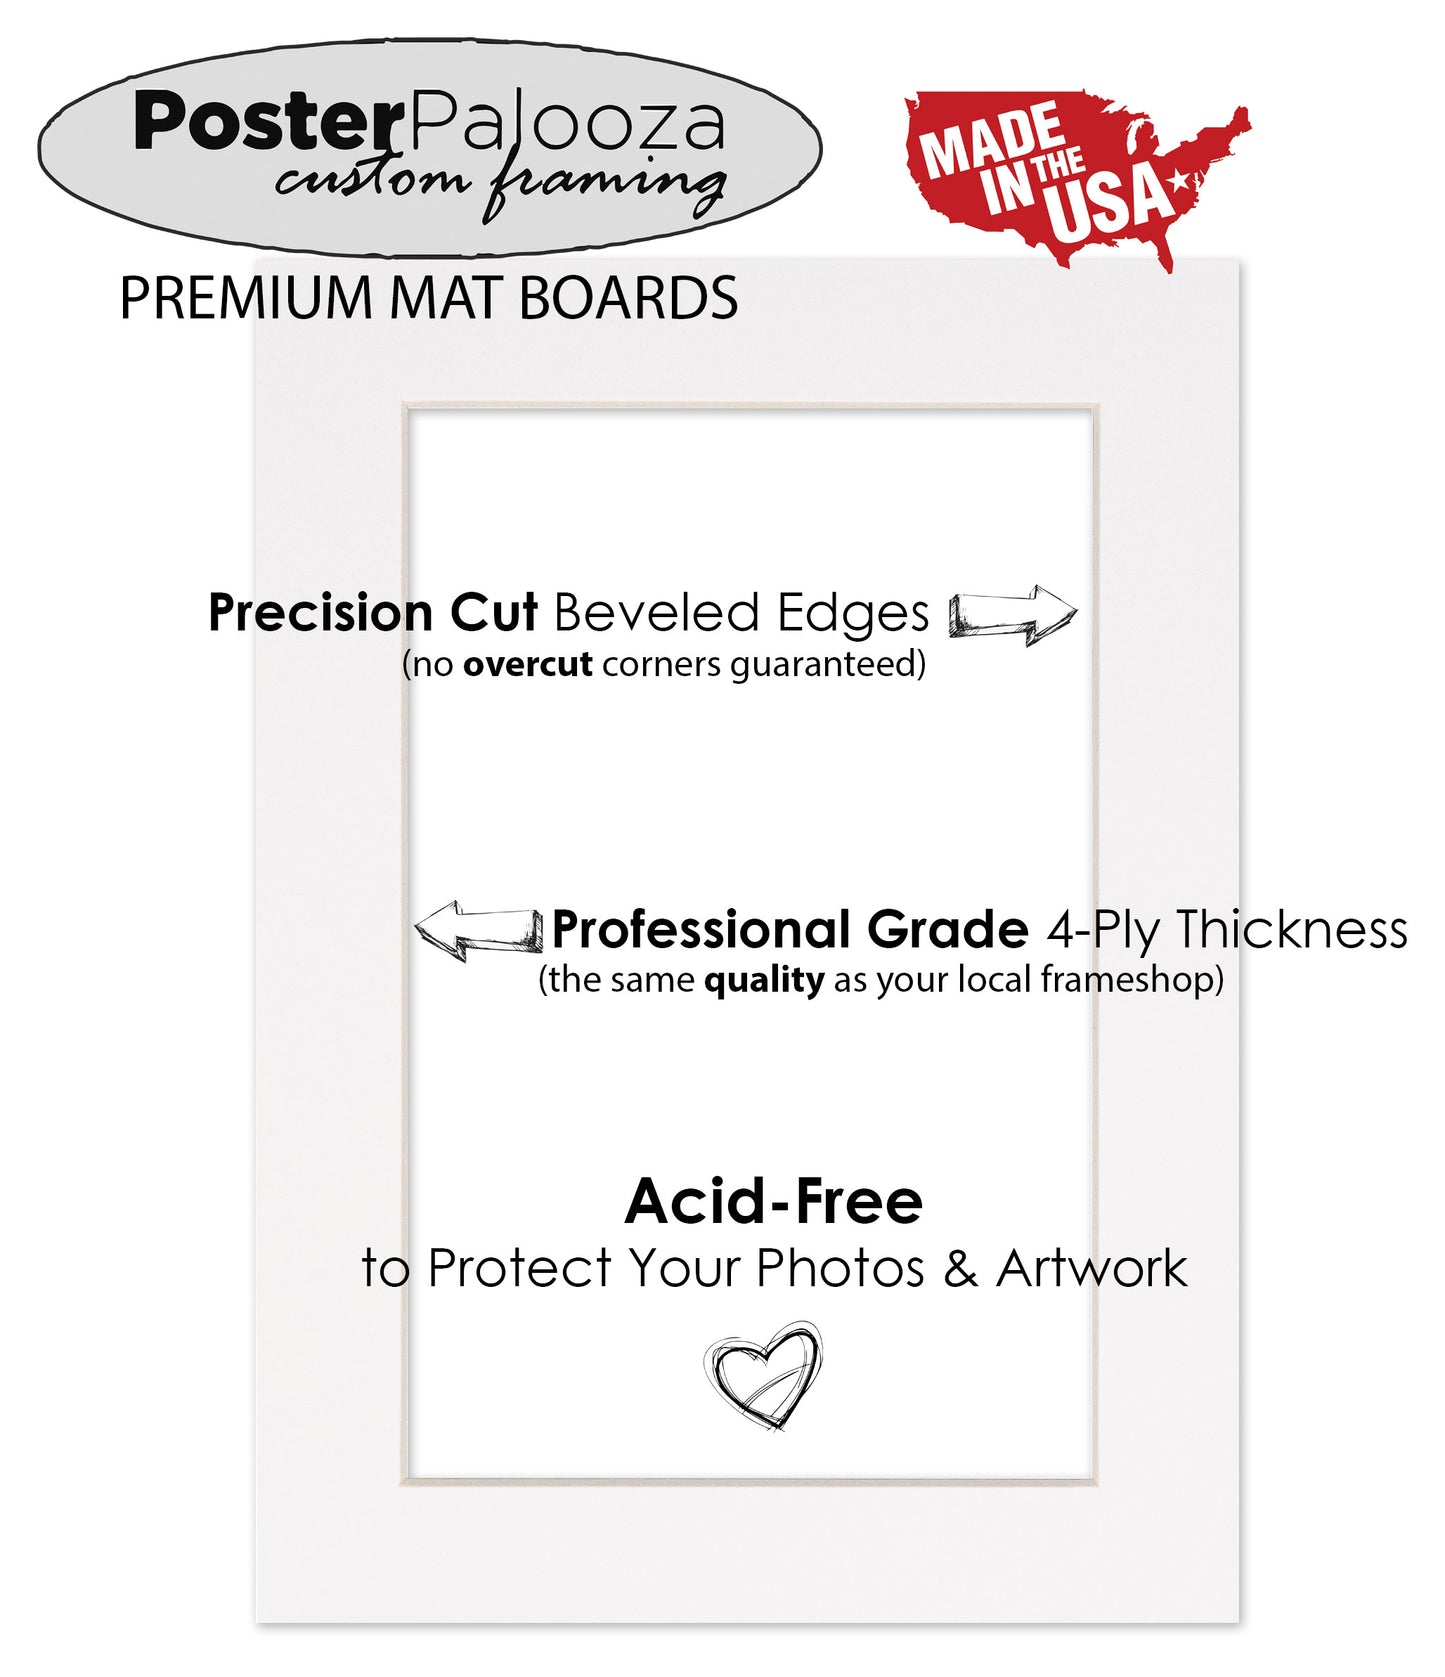 Pack of 10 Fresh Linen Canvas Precut Acid-Free Matboards